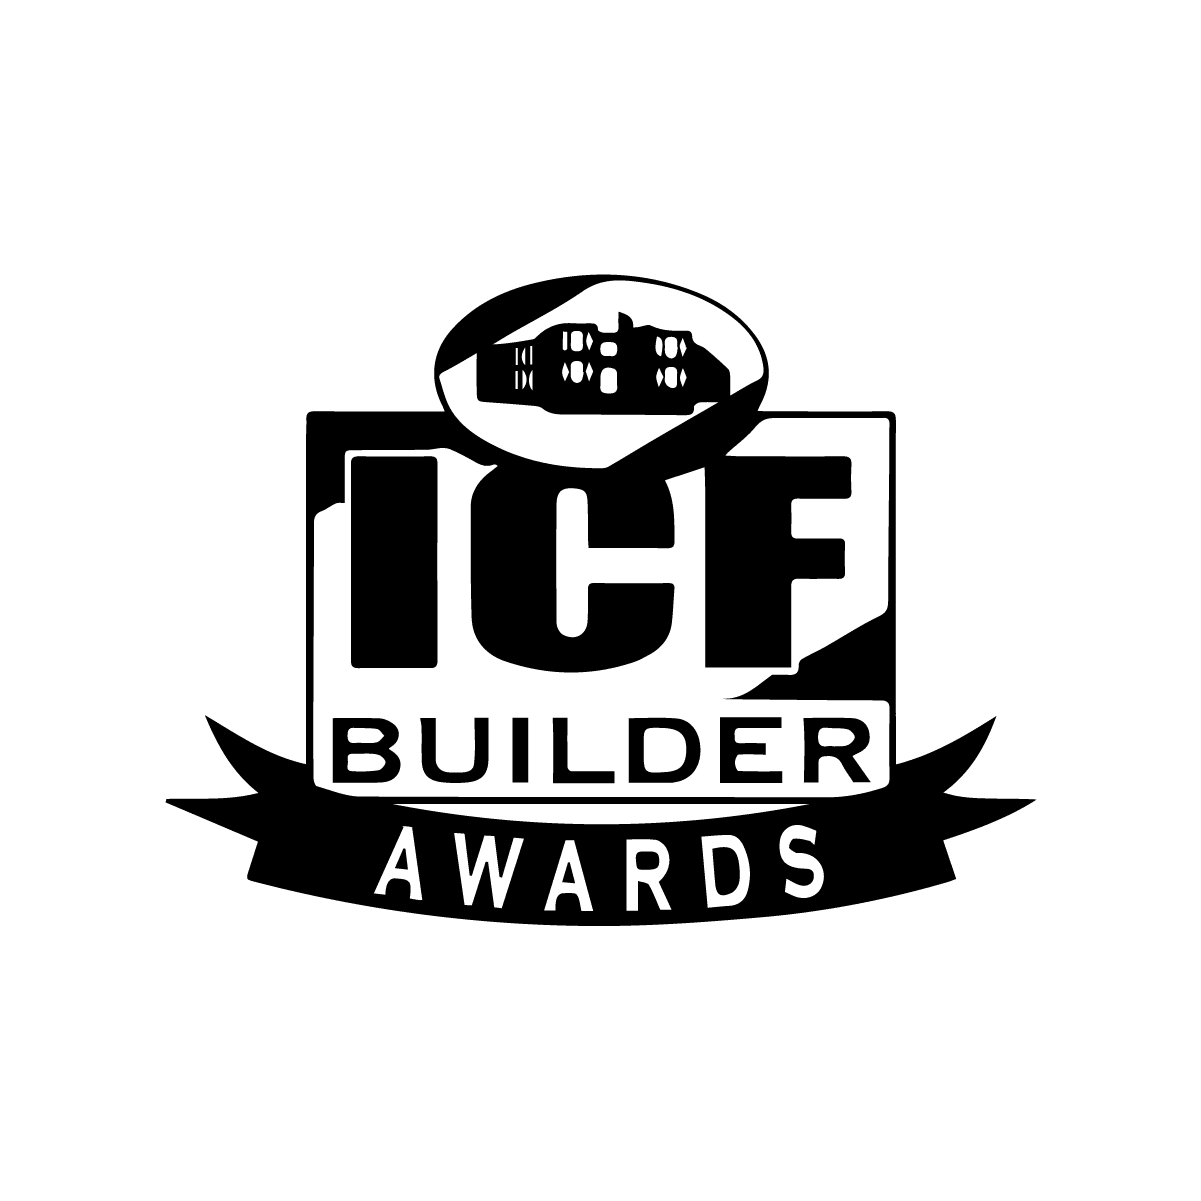 icf builder awards